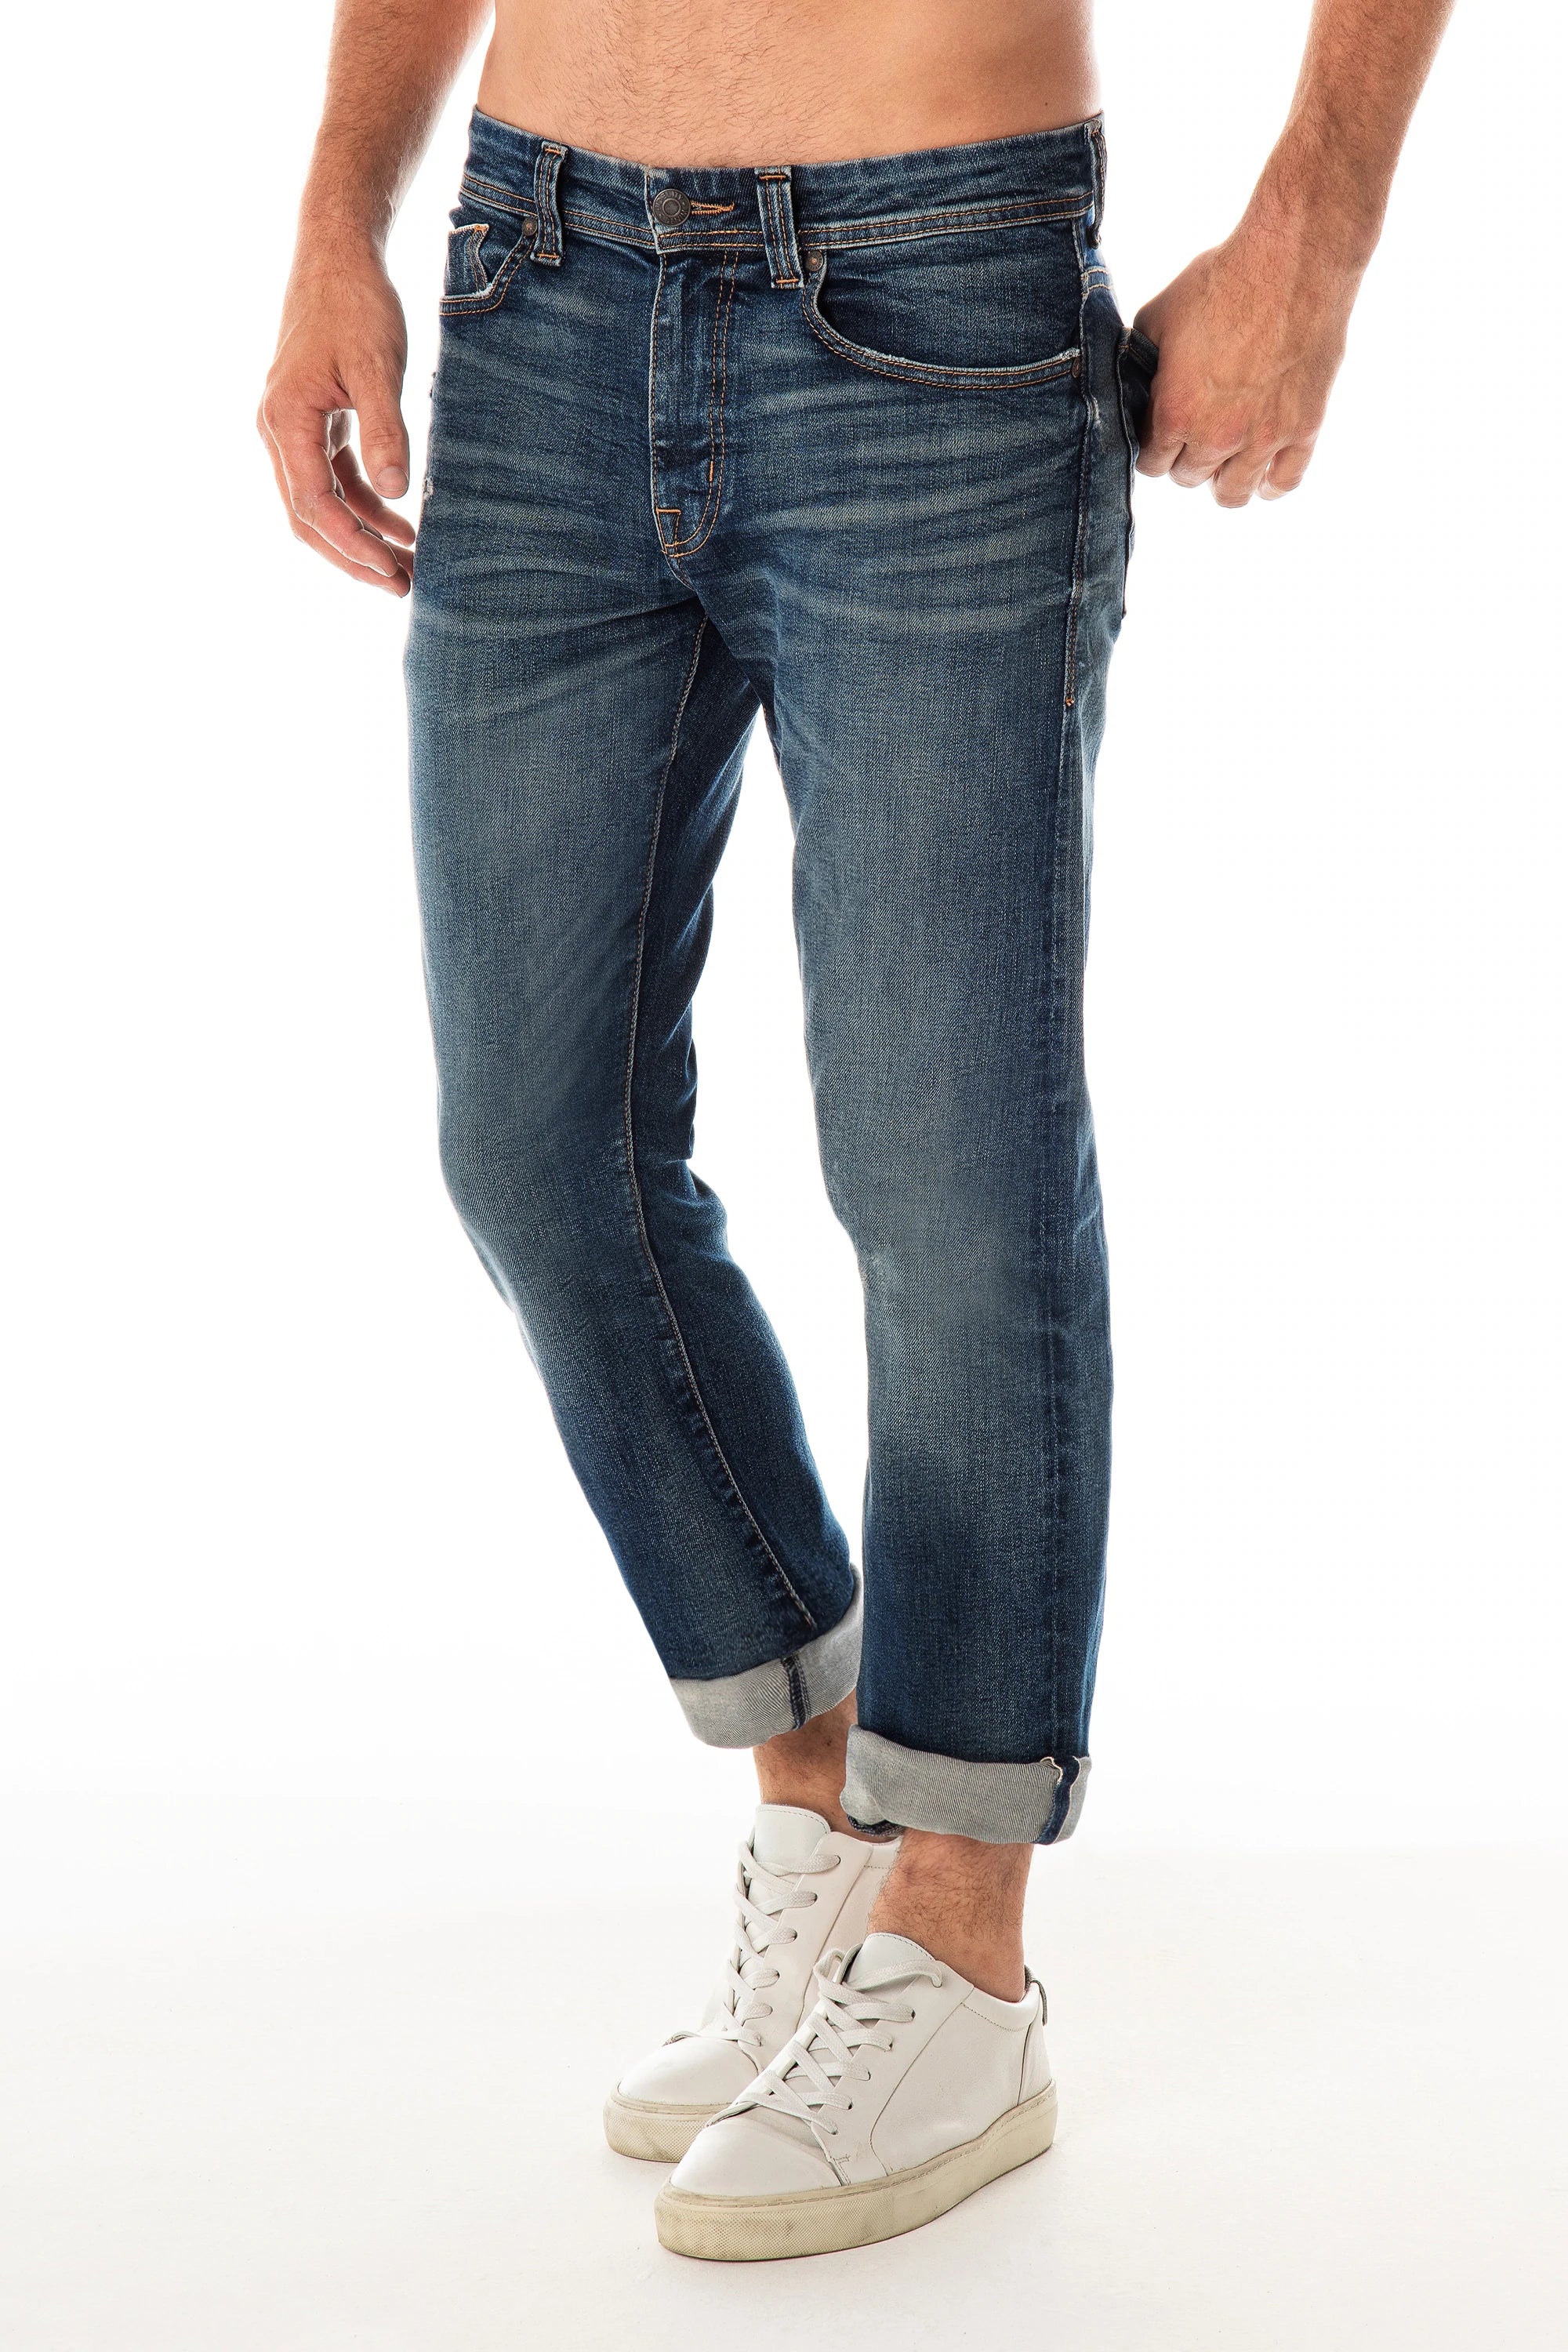 Fidelity Denim Torino Patchouli Selvedge Slim Fit Jeans-Men's Denim-Yaletown-Vancouver-Surrey-Canada